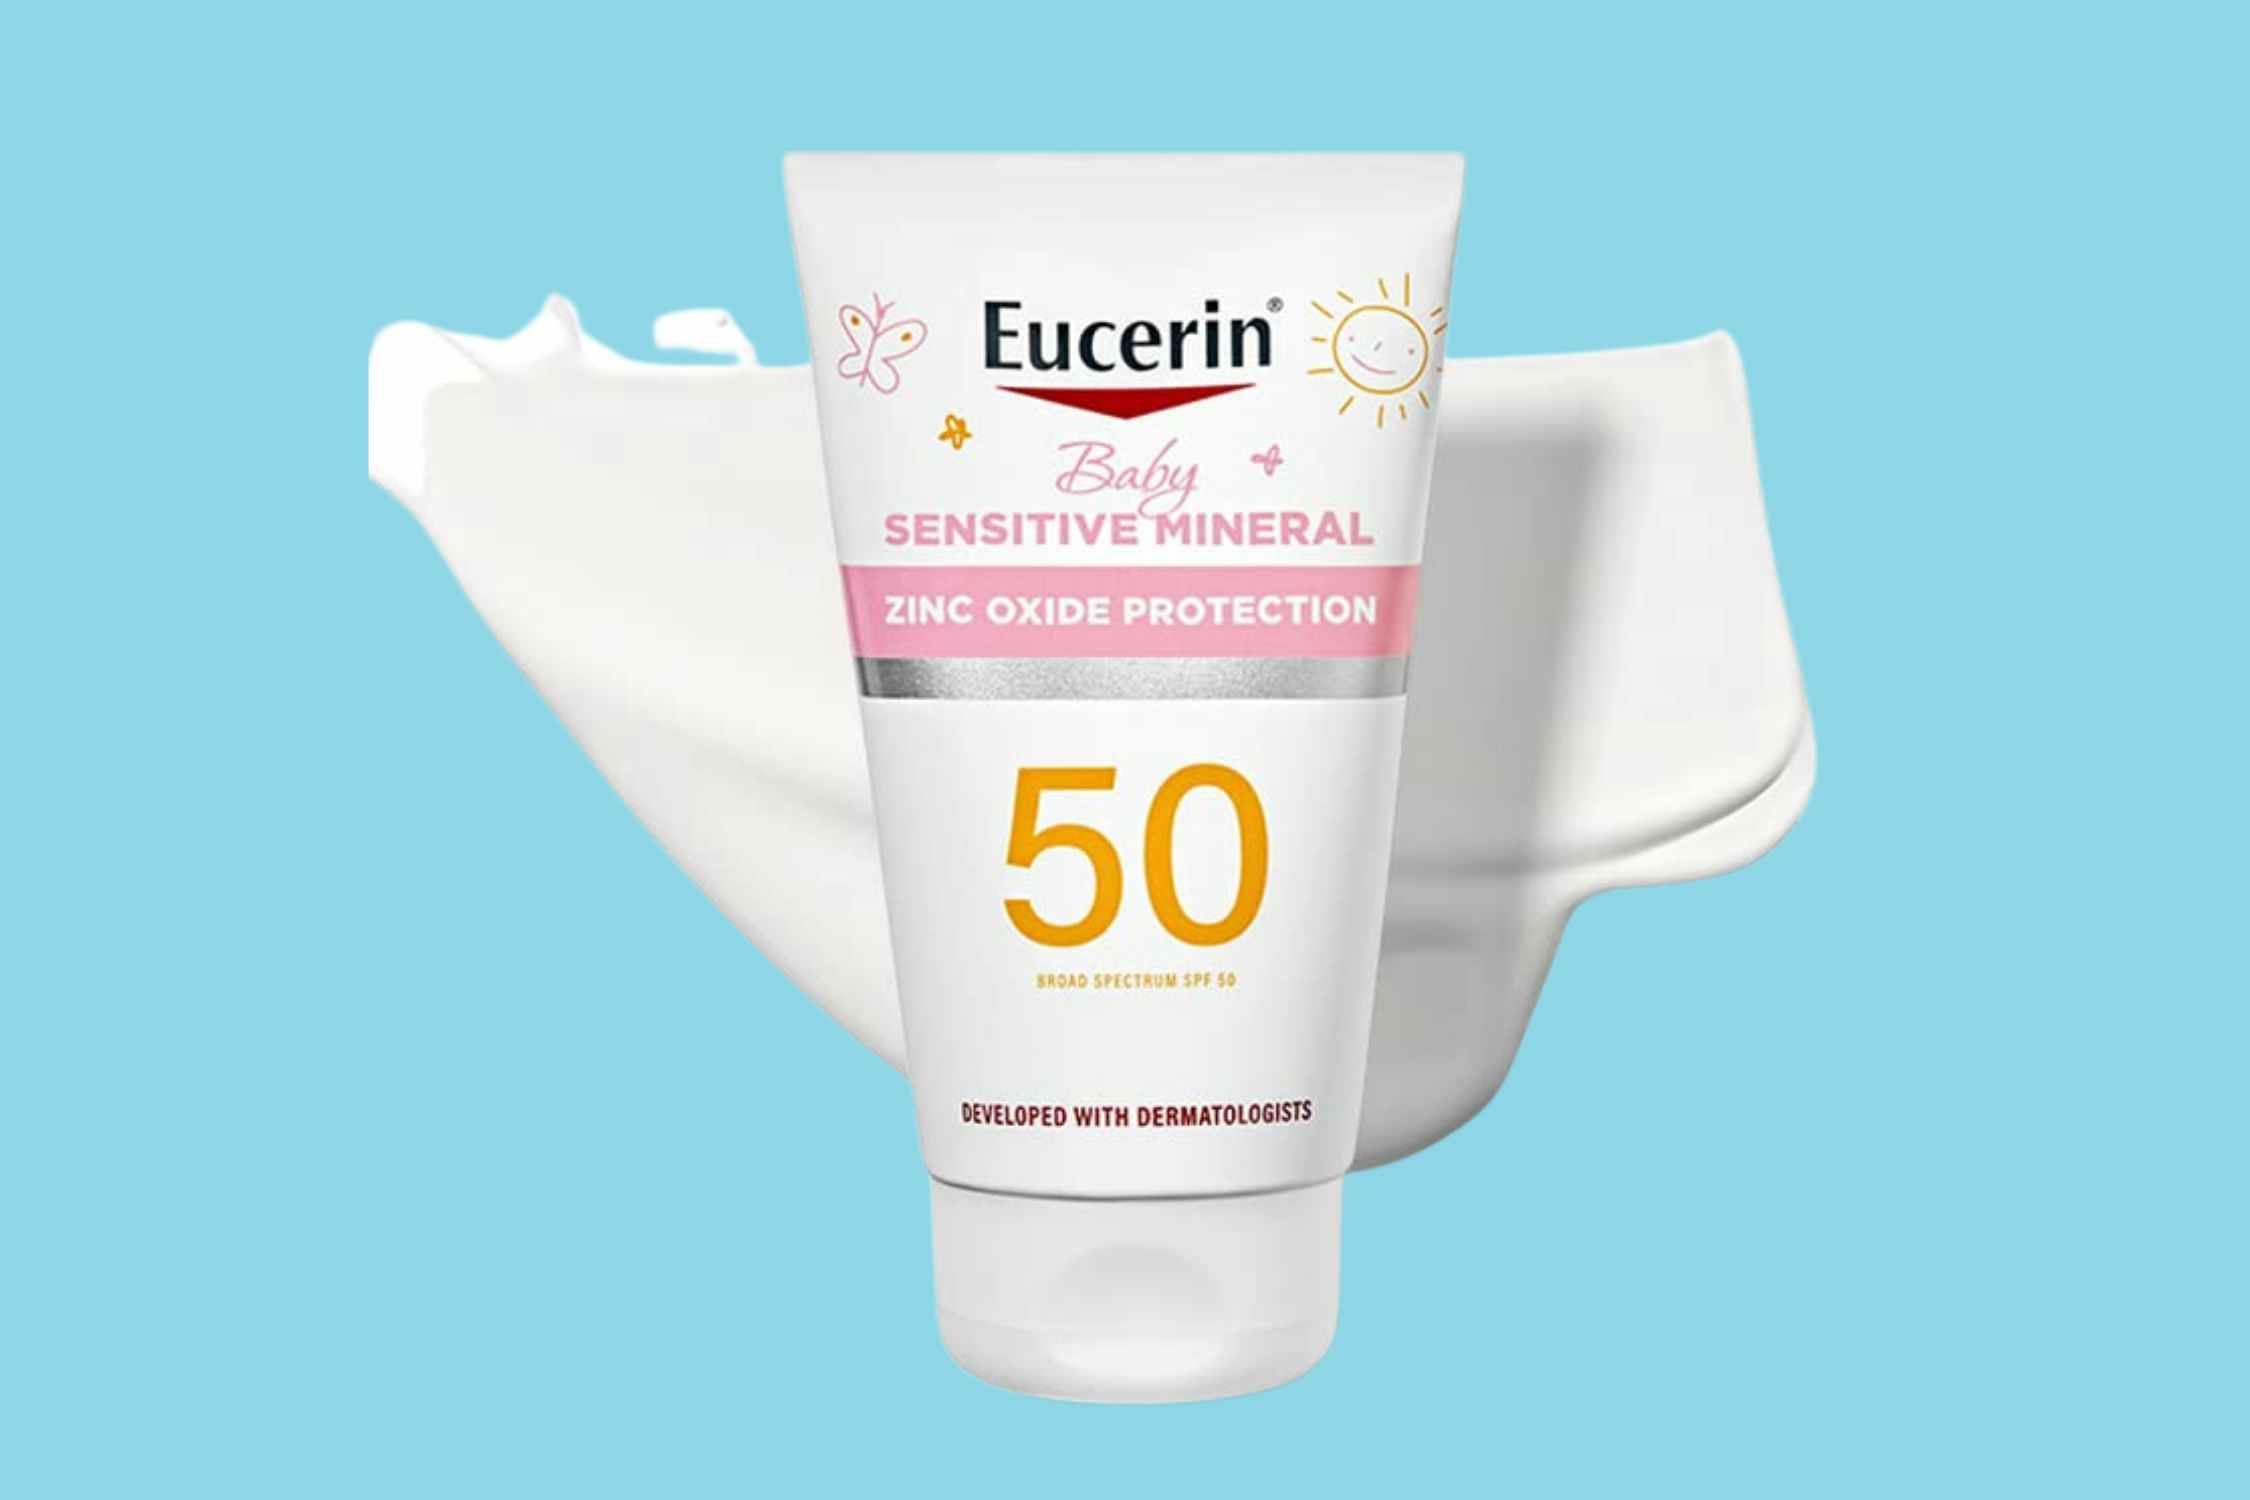 Eucerin Baby Sensitive Mineral Sunscreen, Now $5.76 on Amazon (Reg. $16)